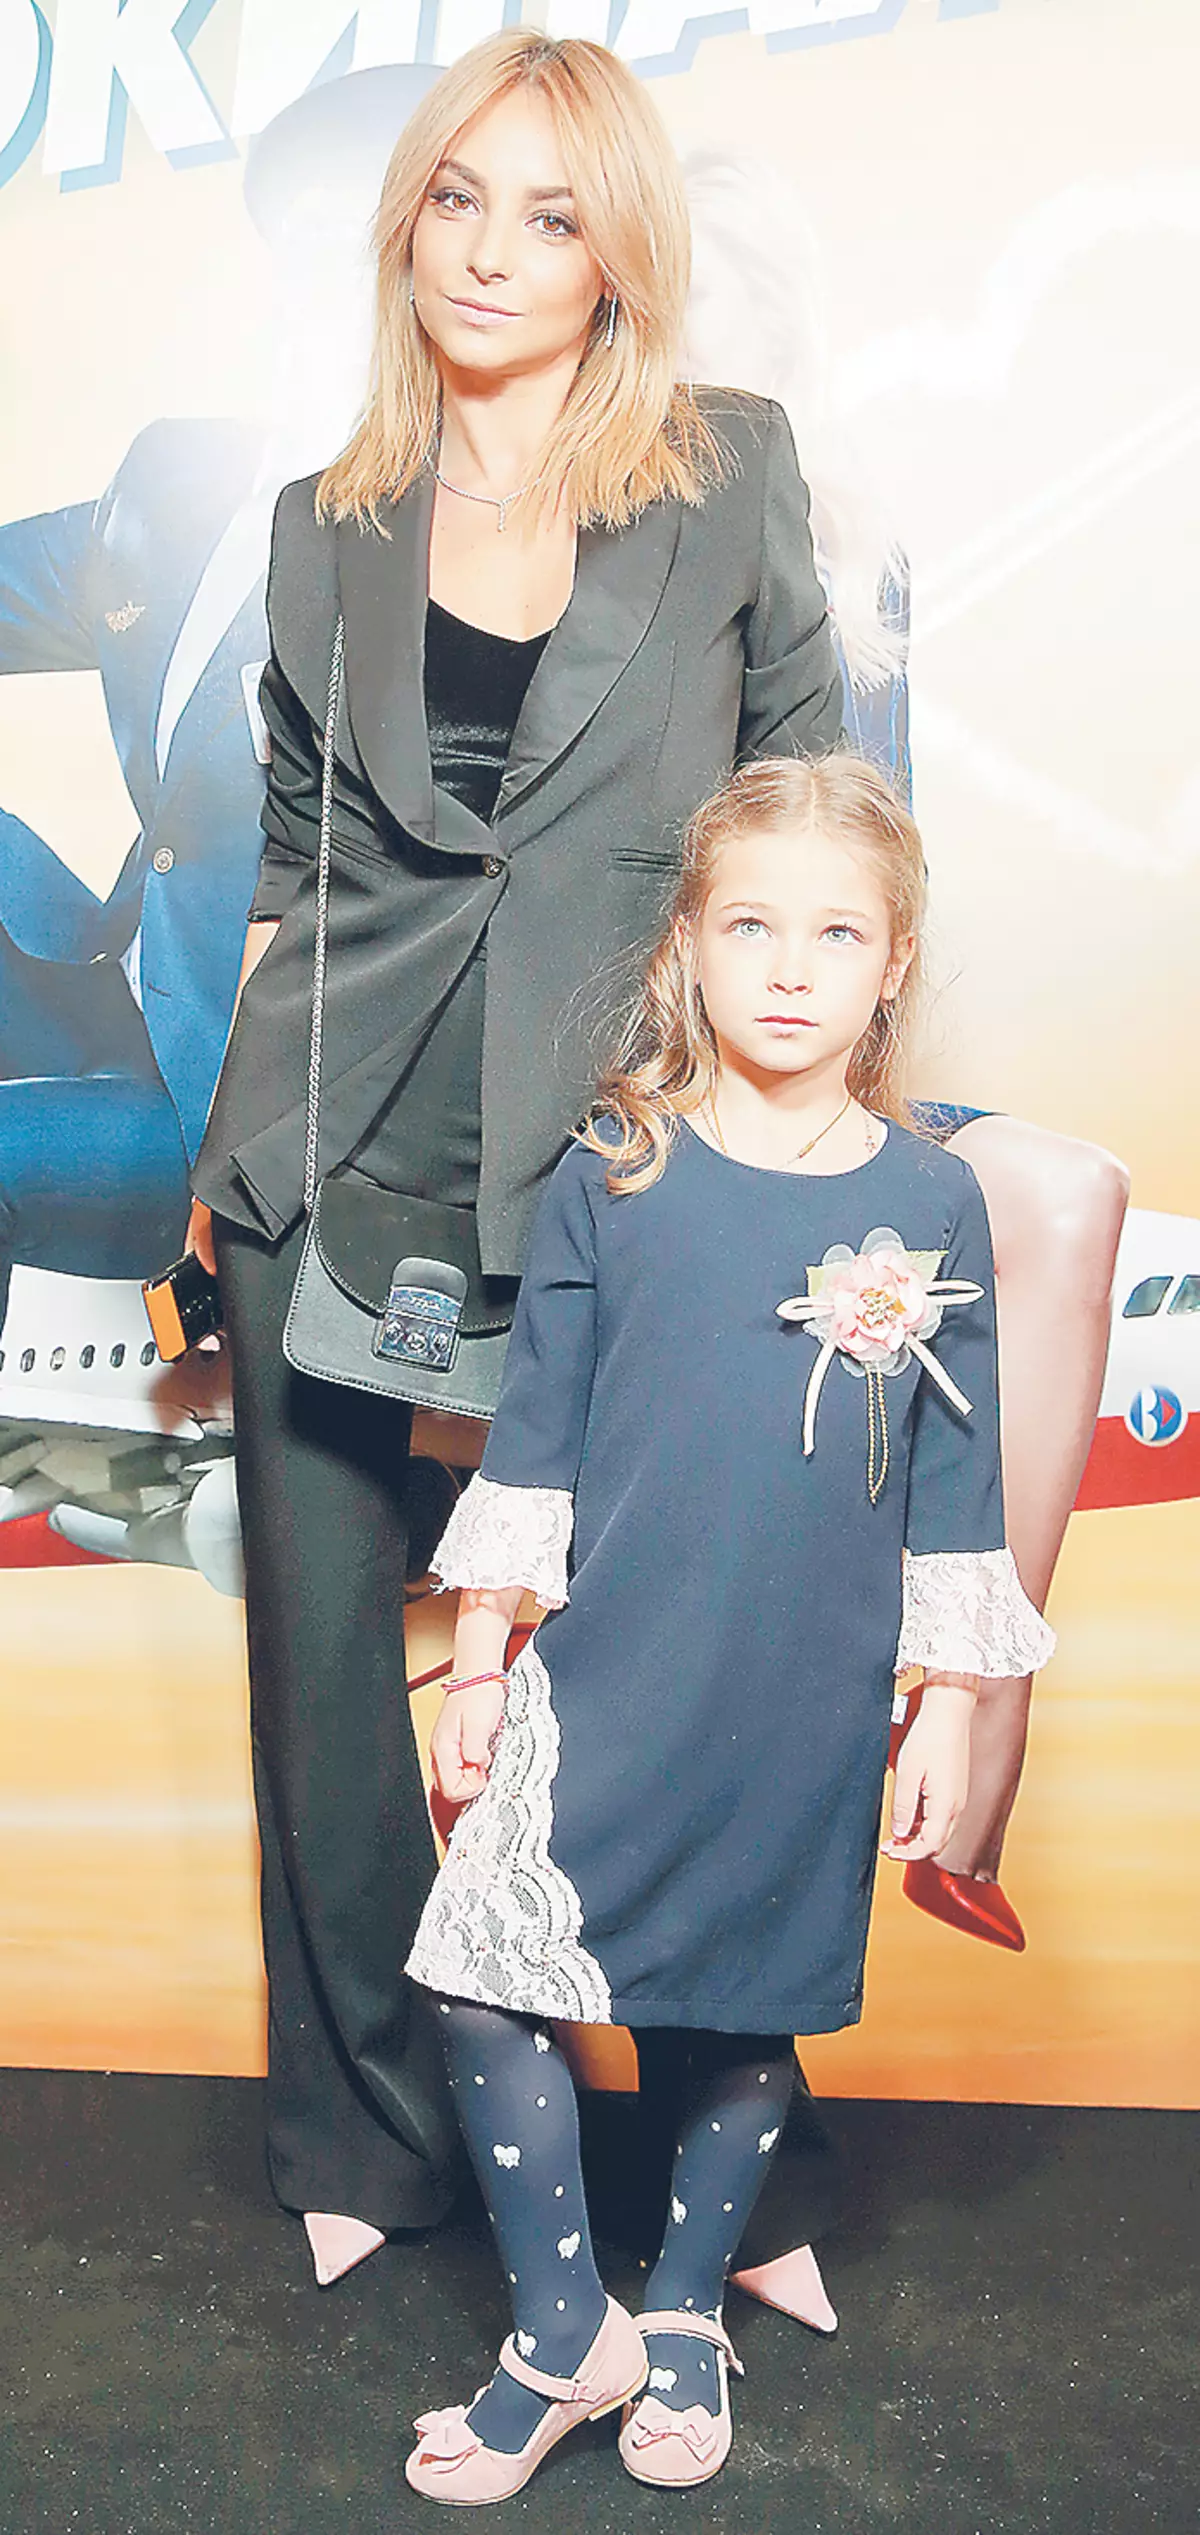 Daria Sagalova brought his older daughter Elizabeth, who has been six years old